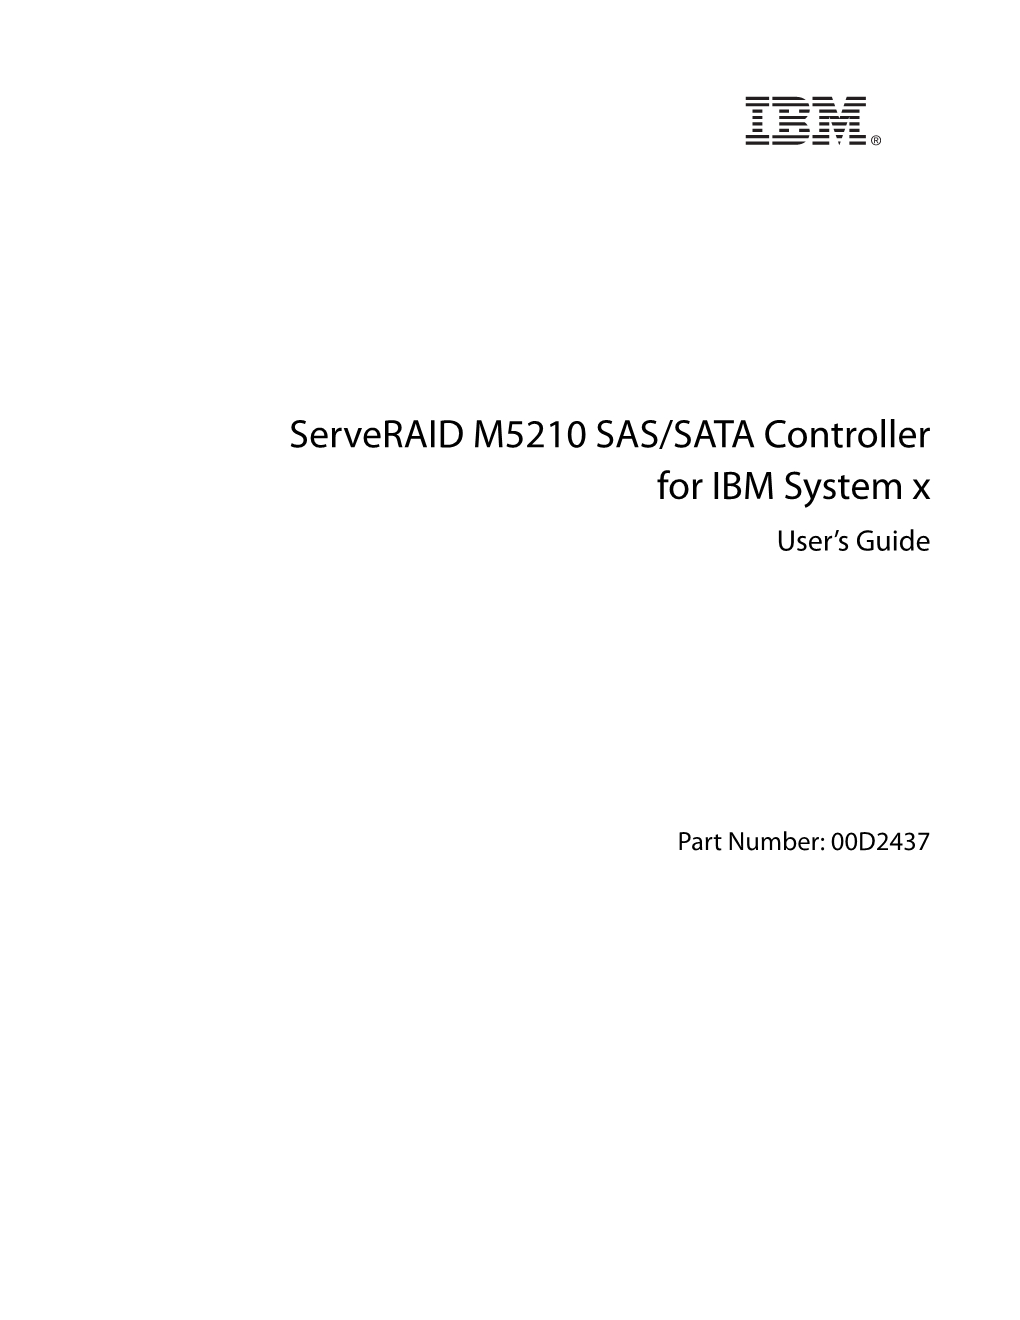 Serveraid M5210 SAS/SATA Controller for IBM System X User’S Guide